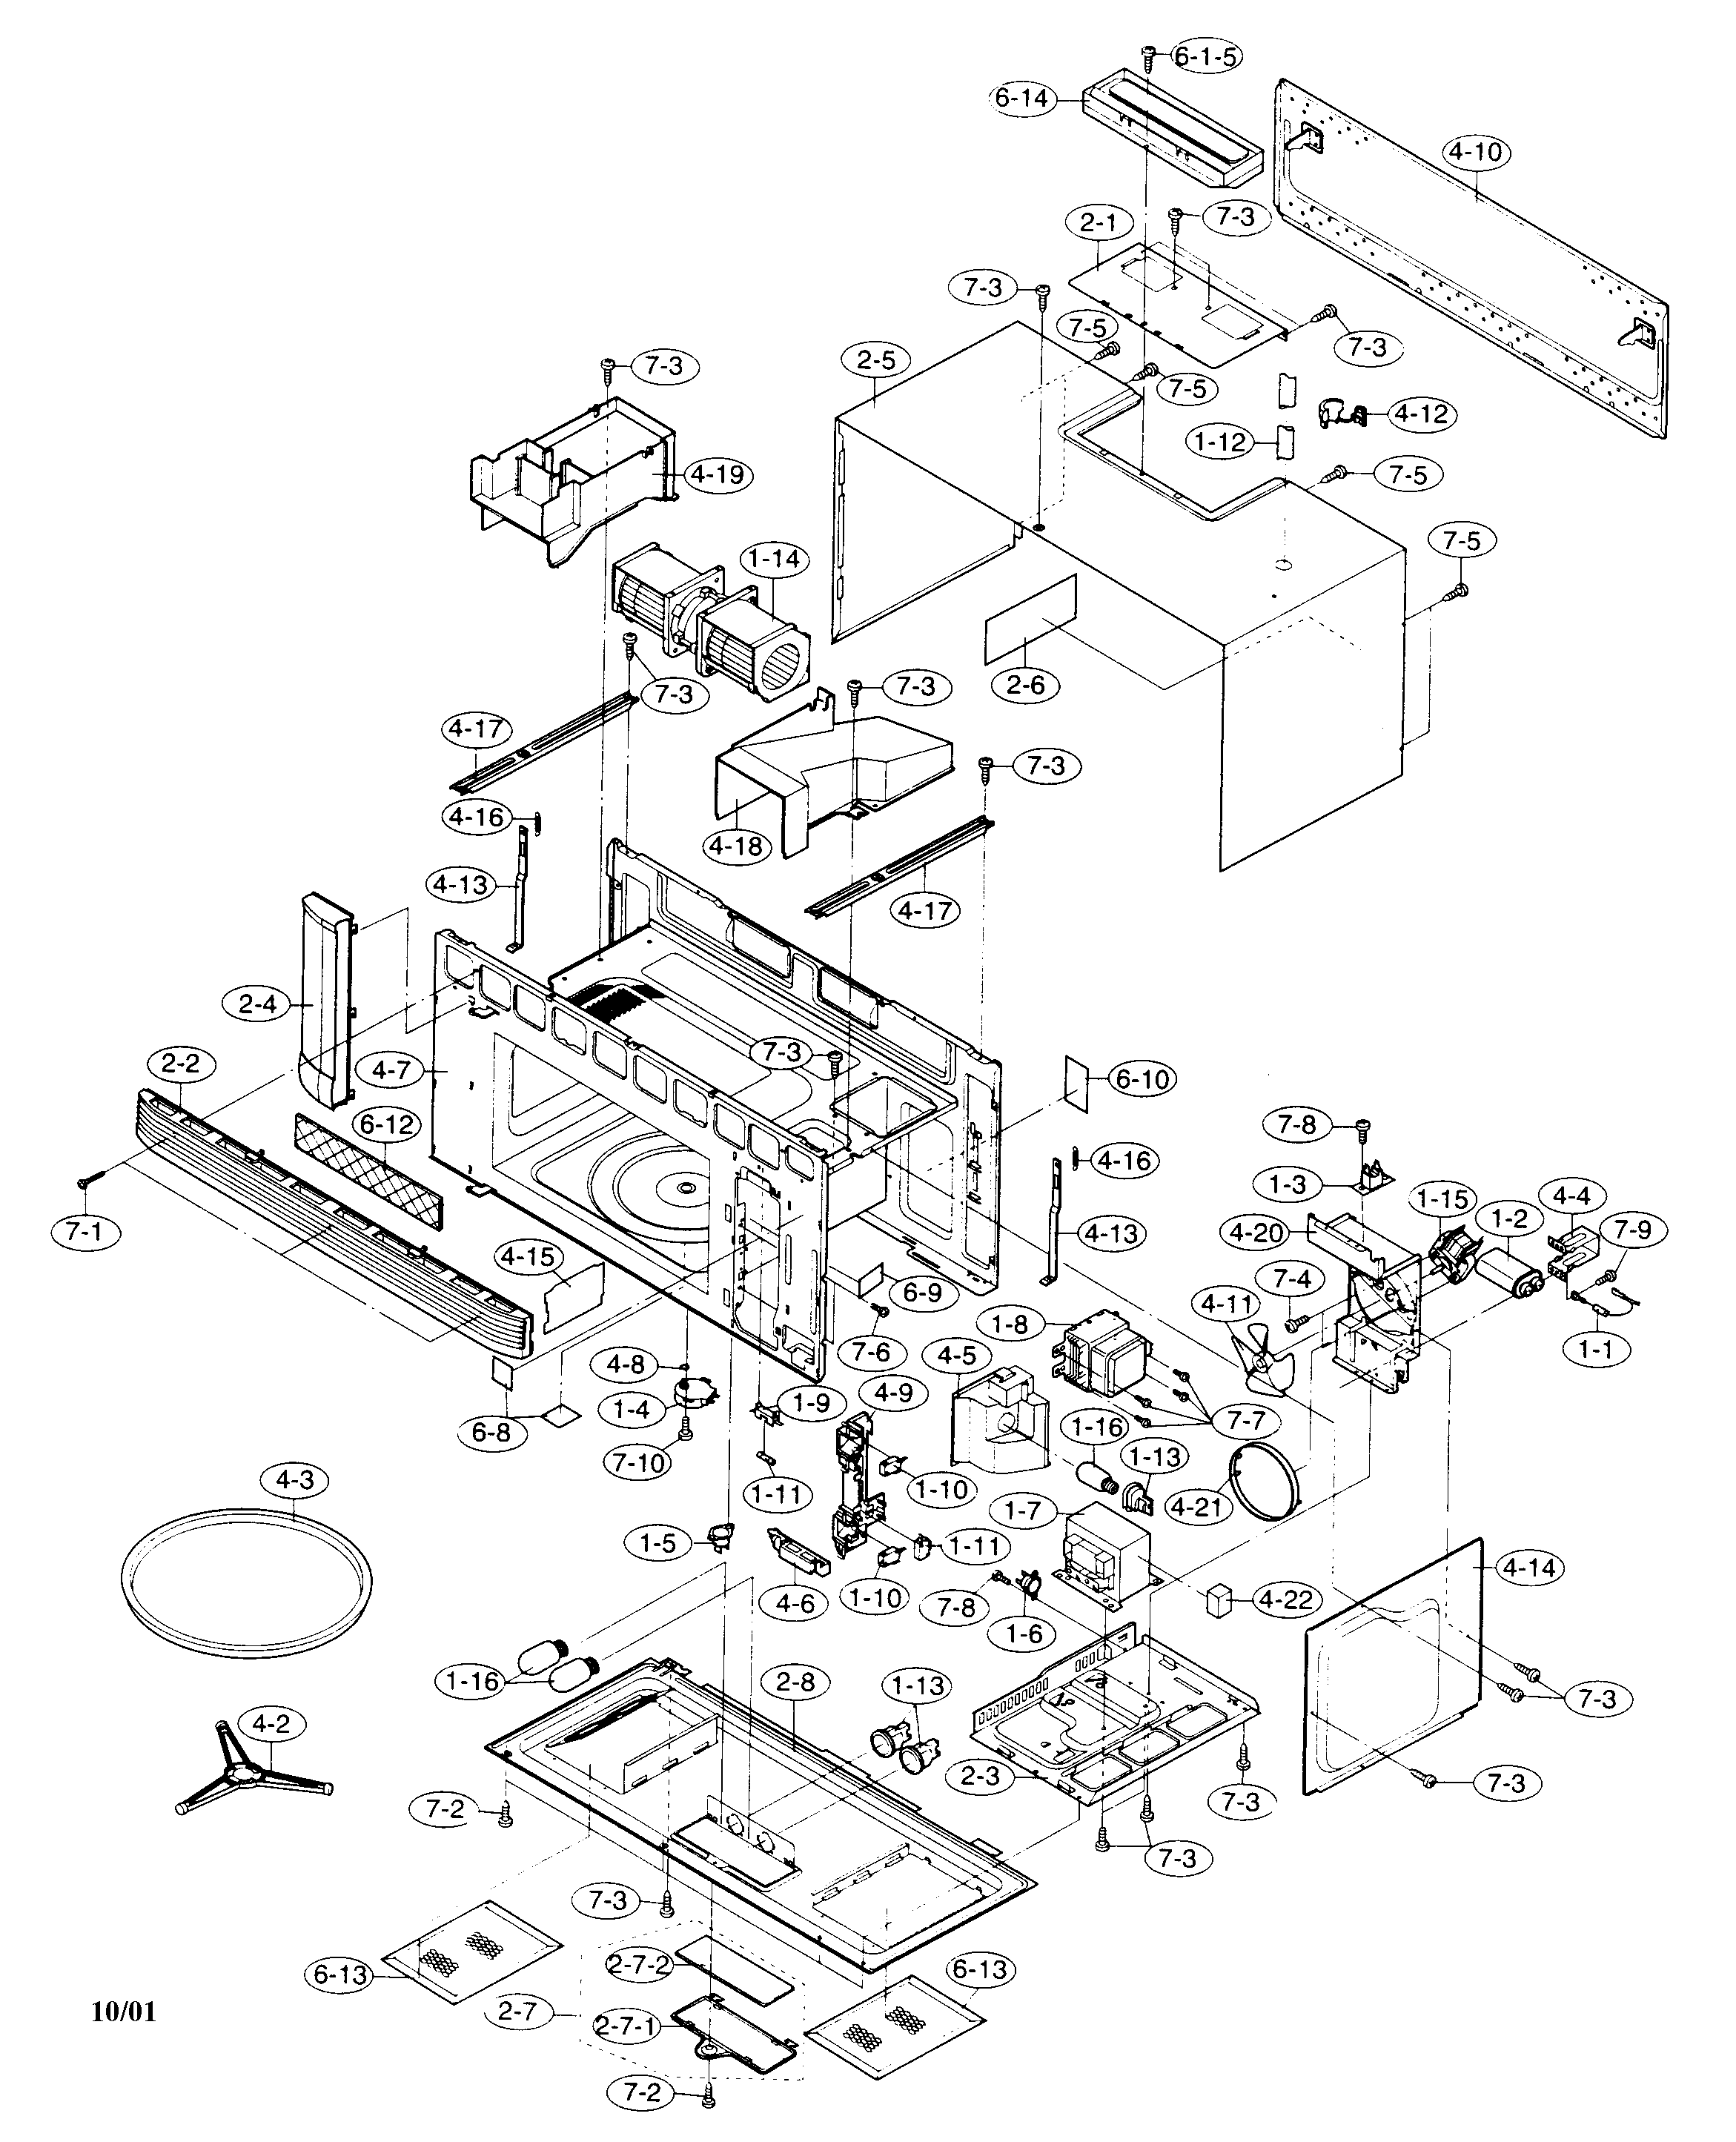 Sharp Carousel Microwave Parts Diagram - Wiring Diagram